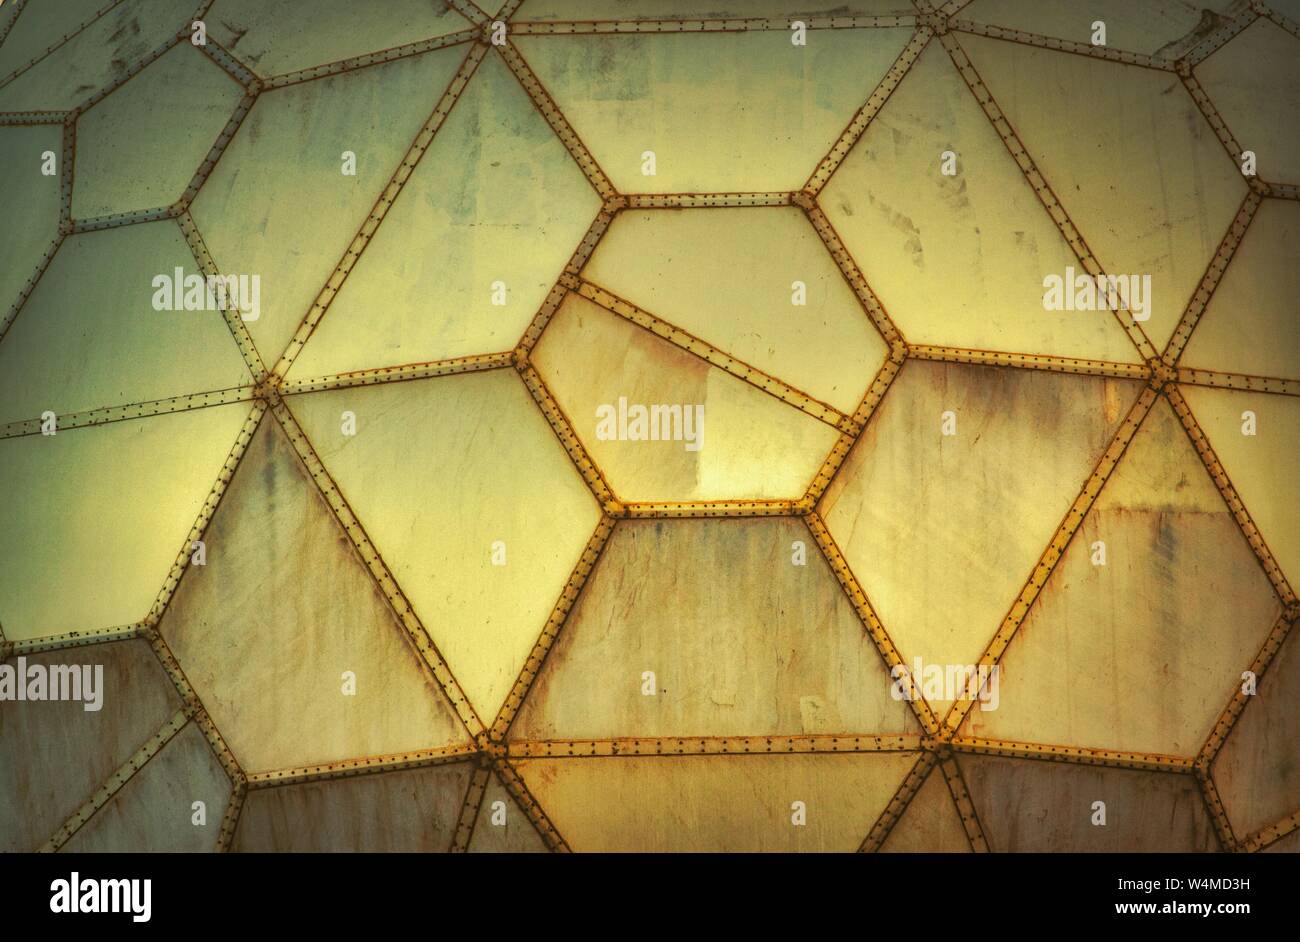 Yellow futuristic grungy wall panels made of geometric shapes Stock Photo